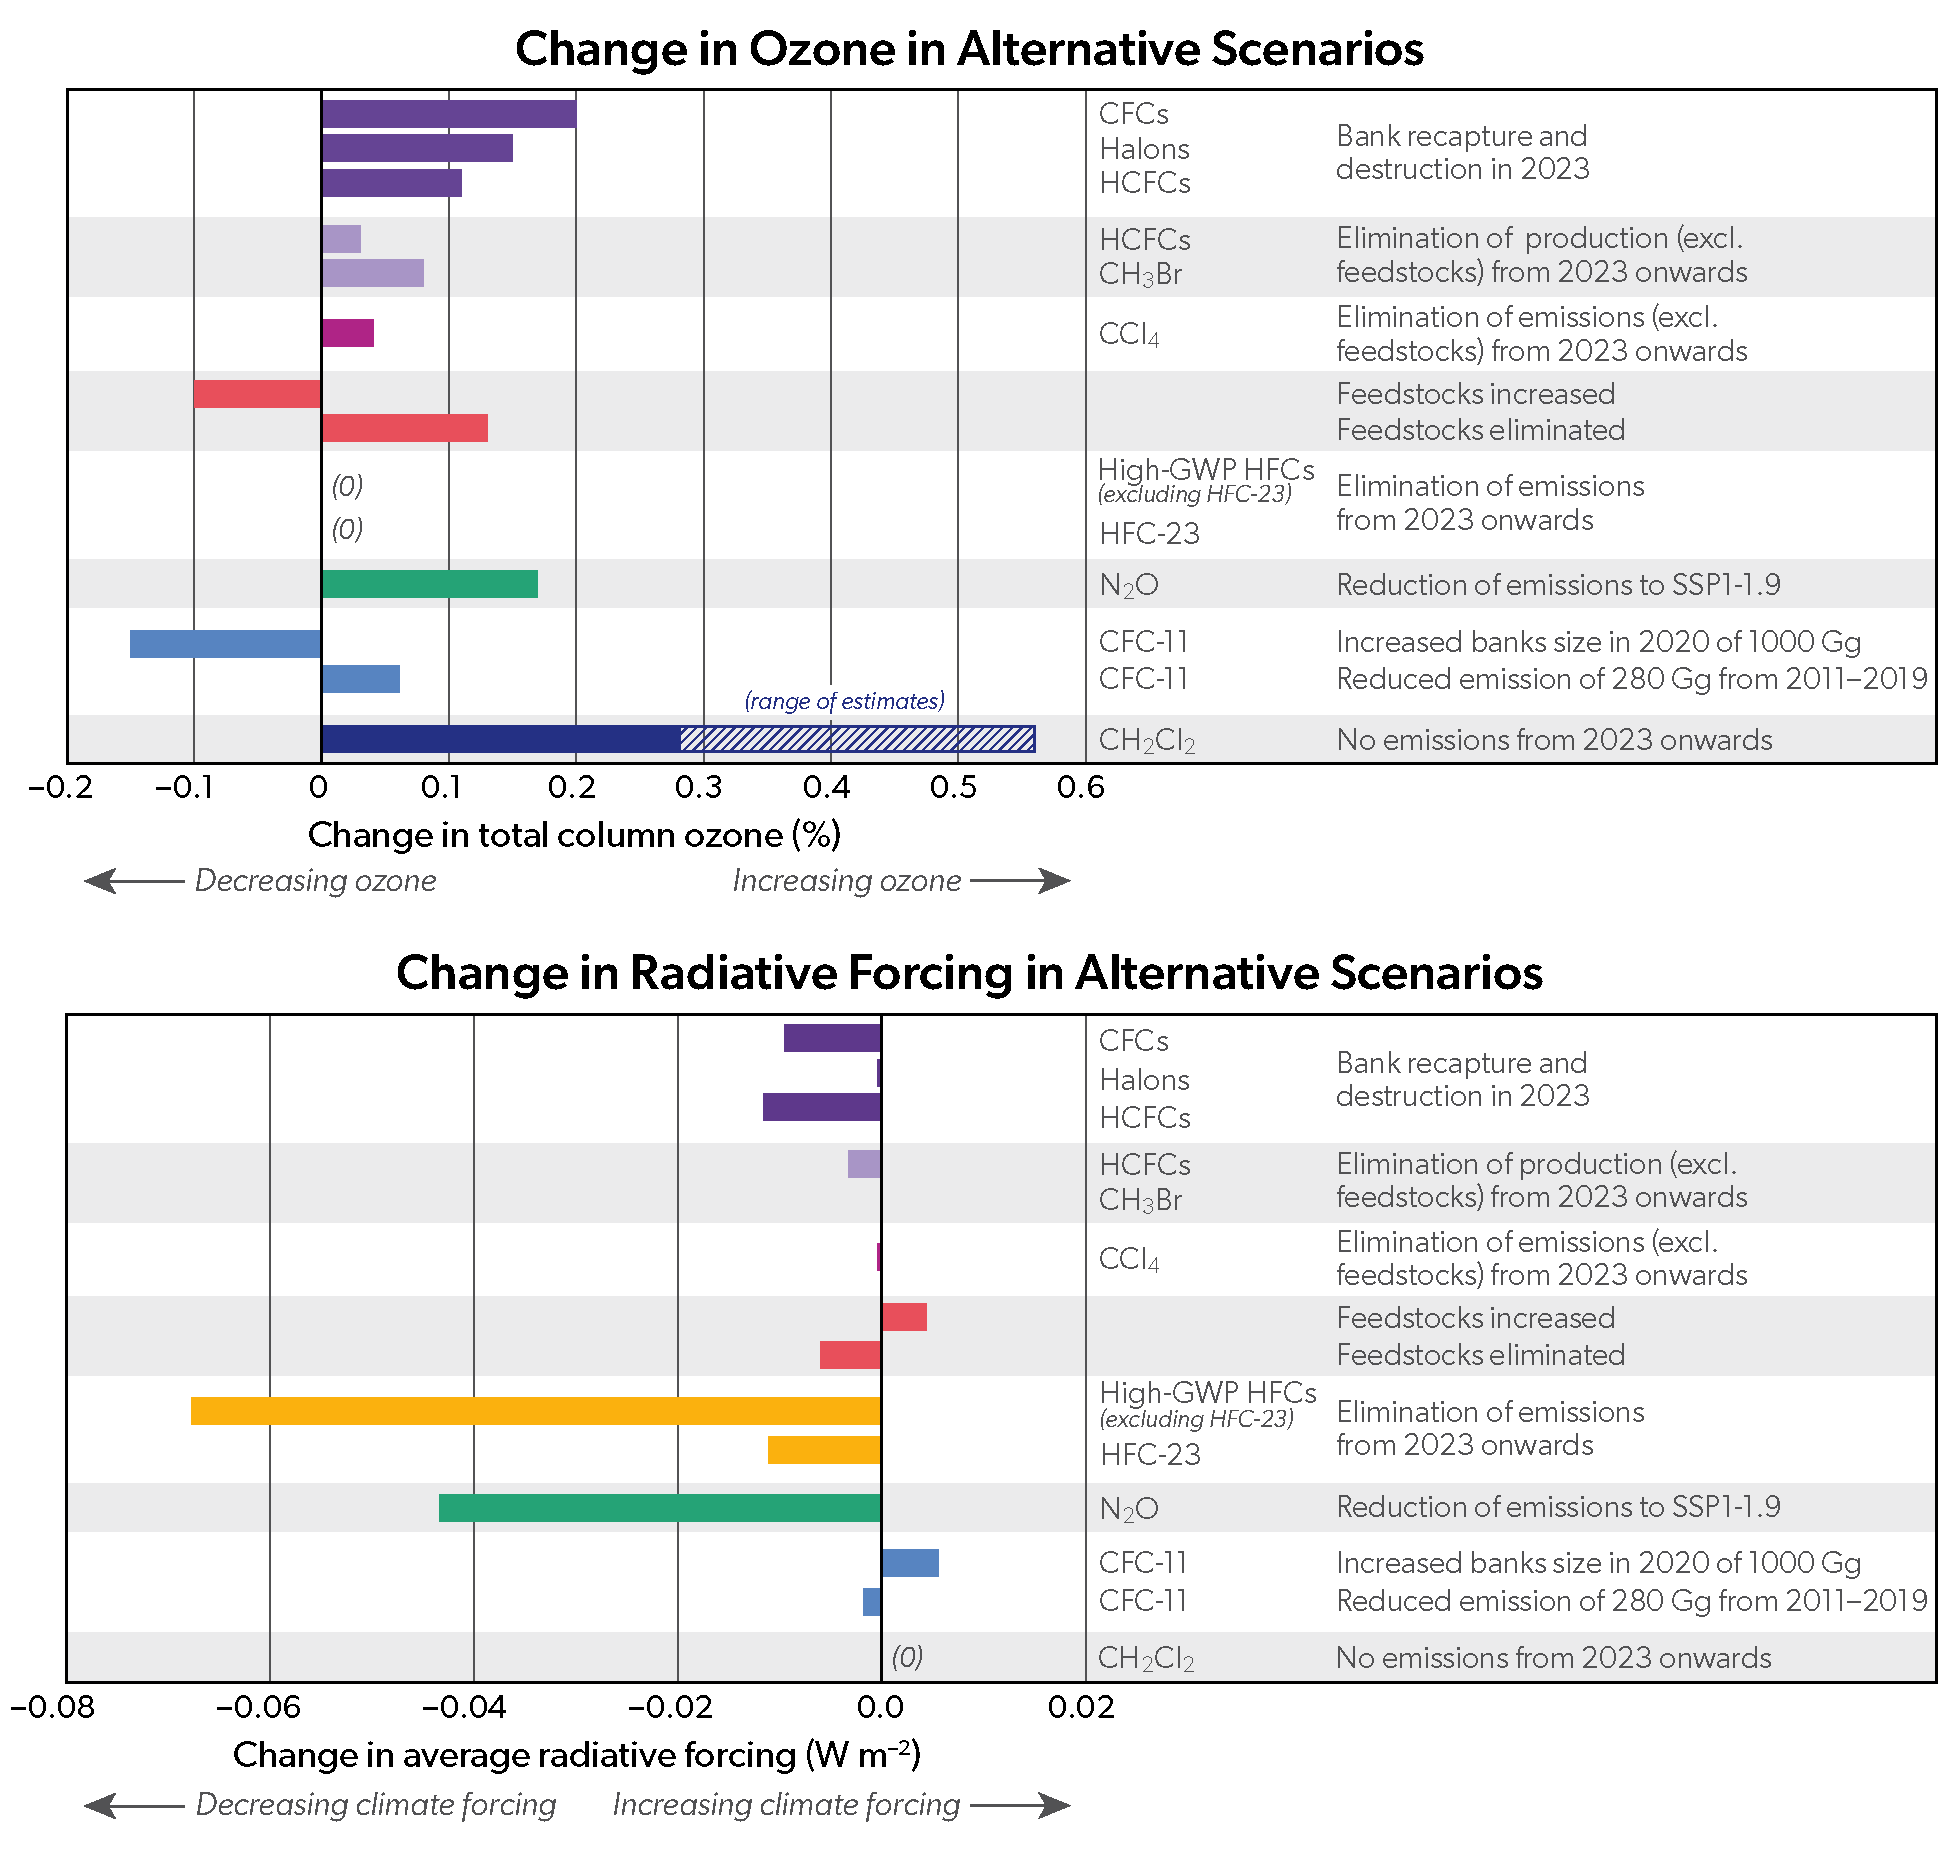 Change in Ozone and Radiative Forcing in Alternative Scenarios